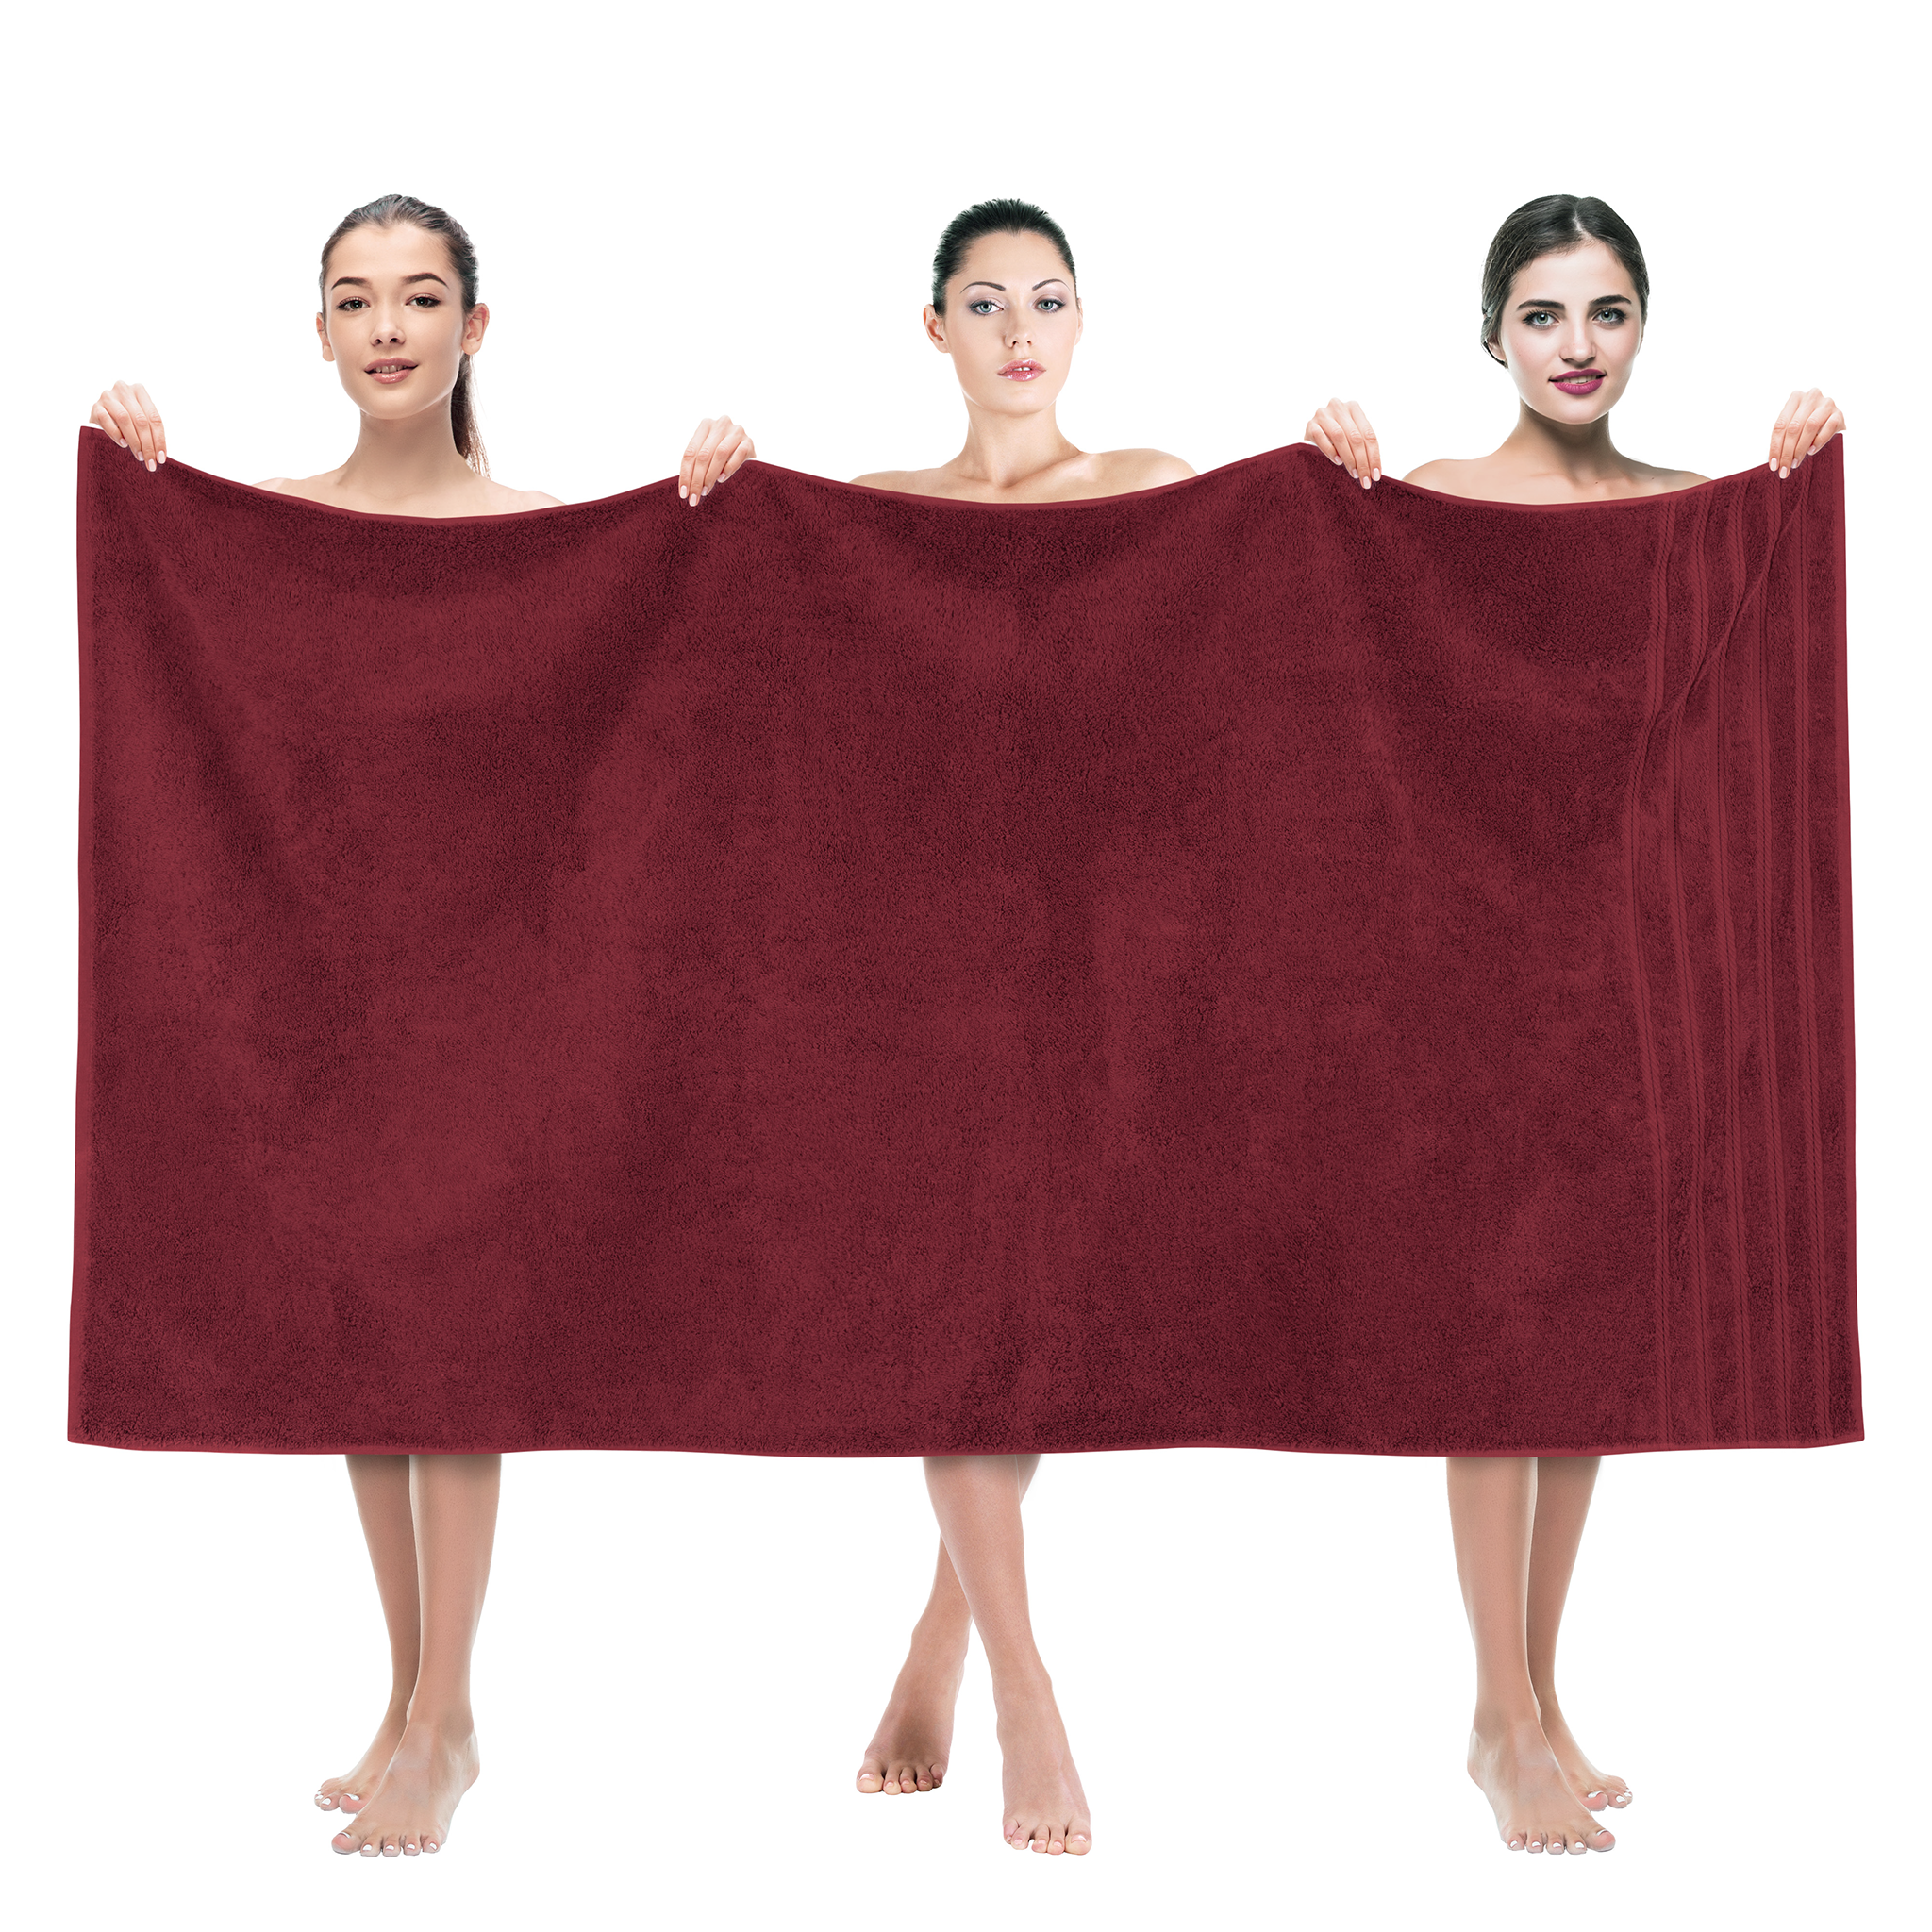 American Soft Linen - 35x70 Jumbo Bath Sheet Turkish Bath Towel - 16 Piece Case Pack - Bordeaux-Red - 1